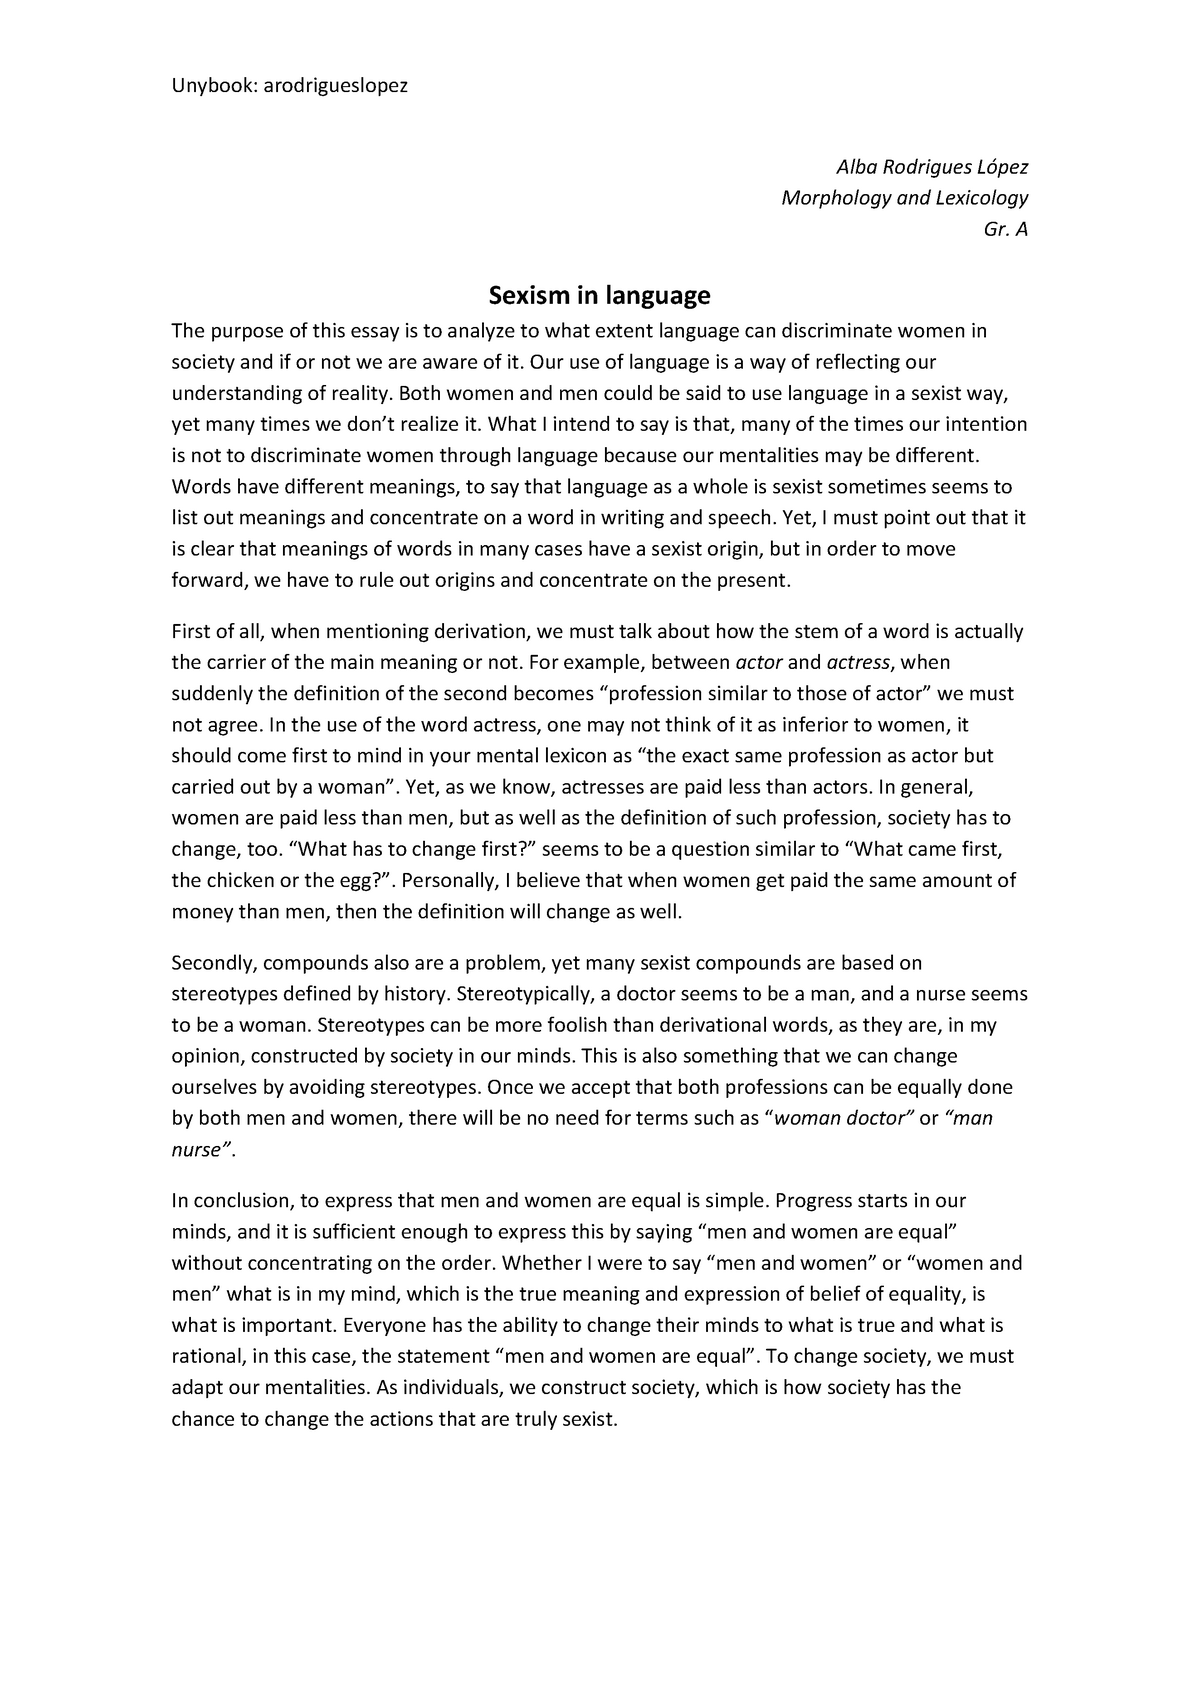 sexism in language essay